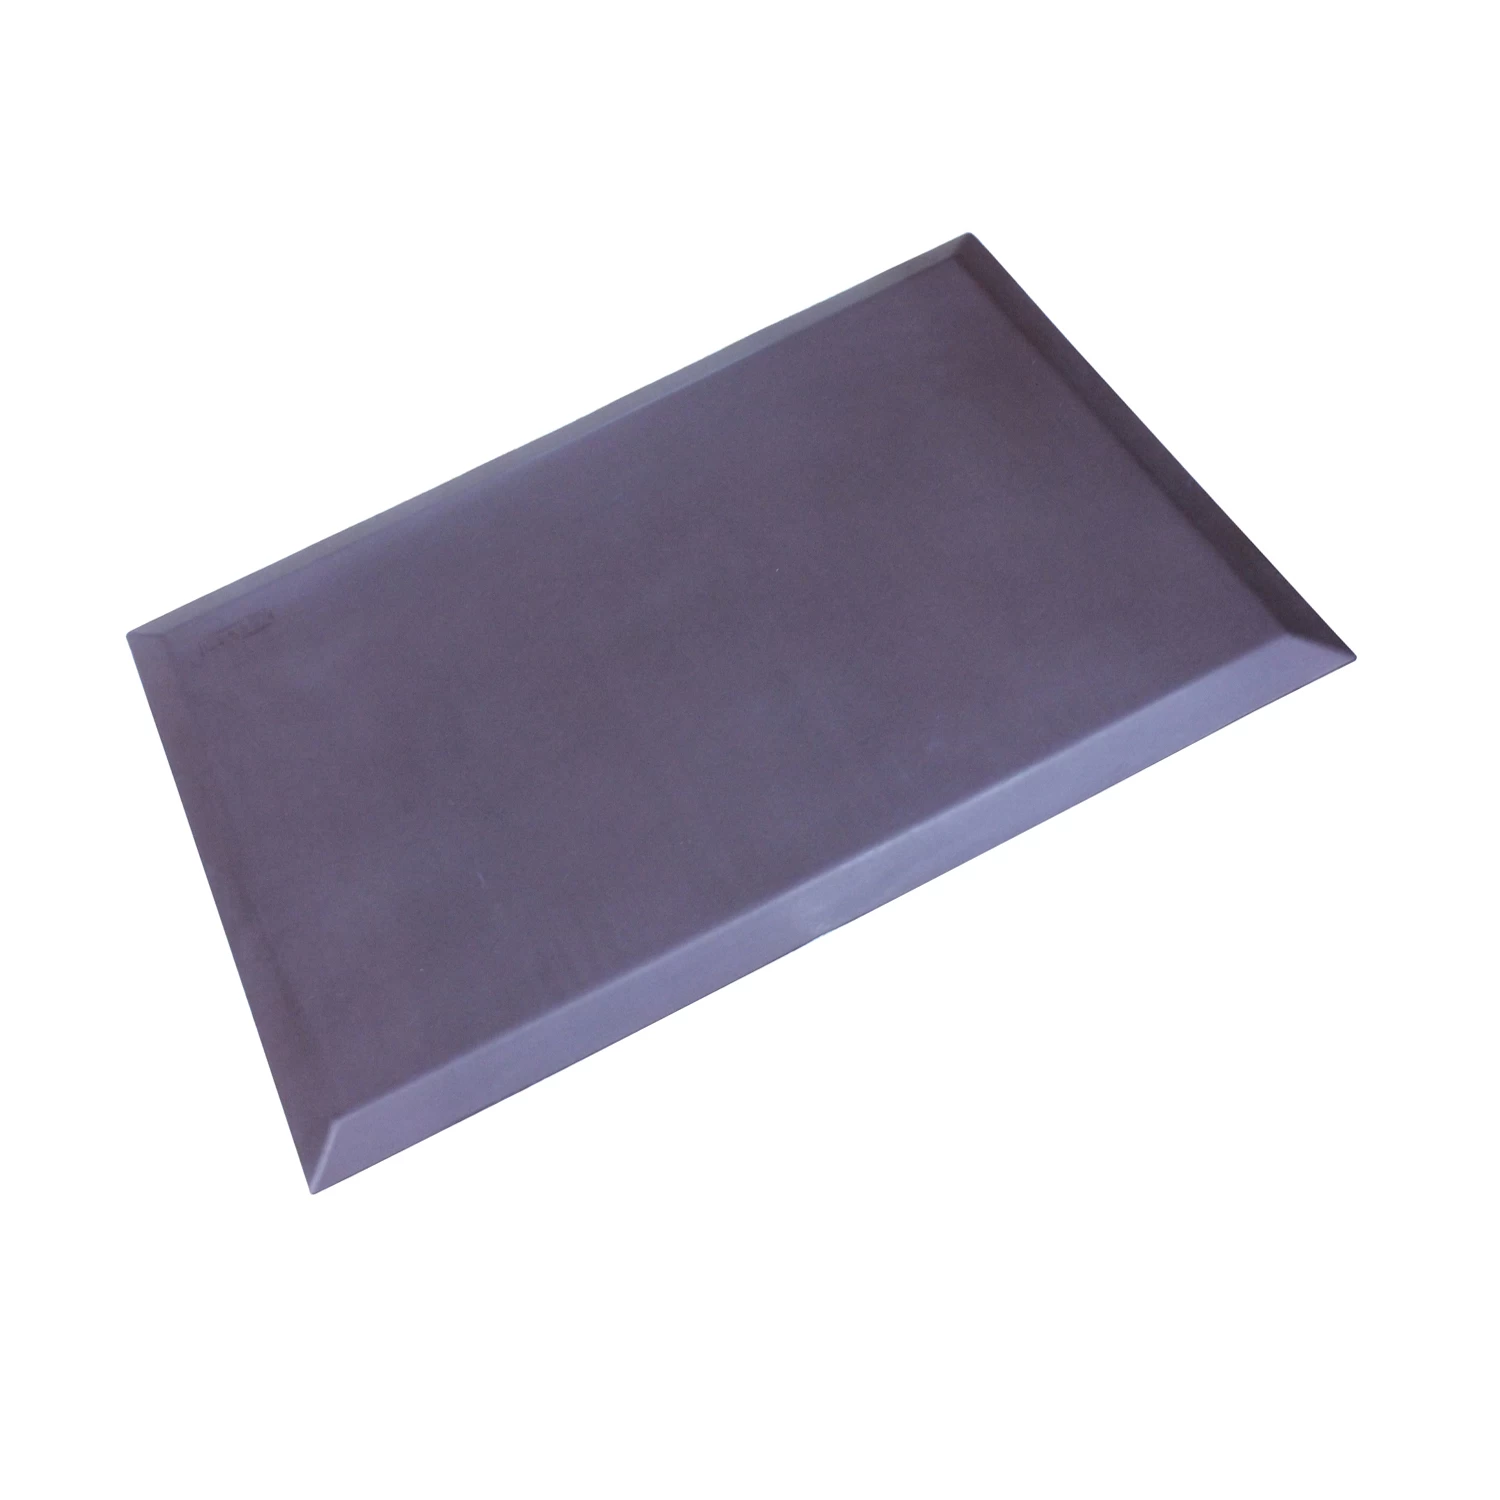 中国 Good Quality Pu Anti Fatigue Standing Desk Mat,PU floor mat,standing desk mat,anti-fatigue floor mat 制造商